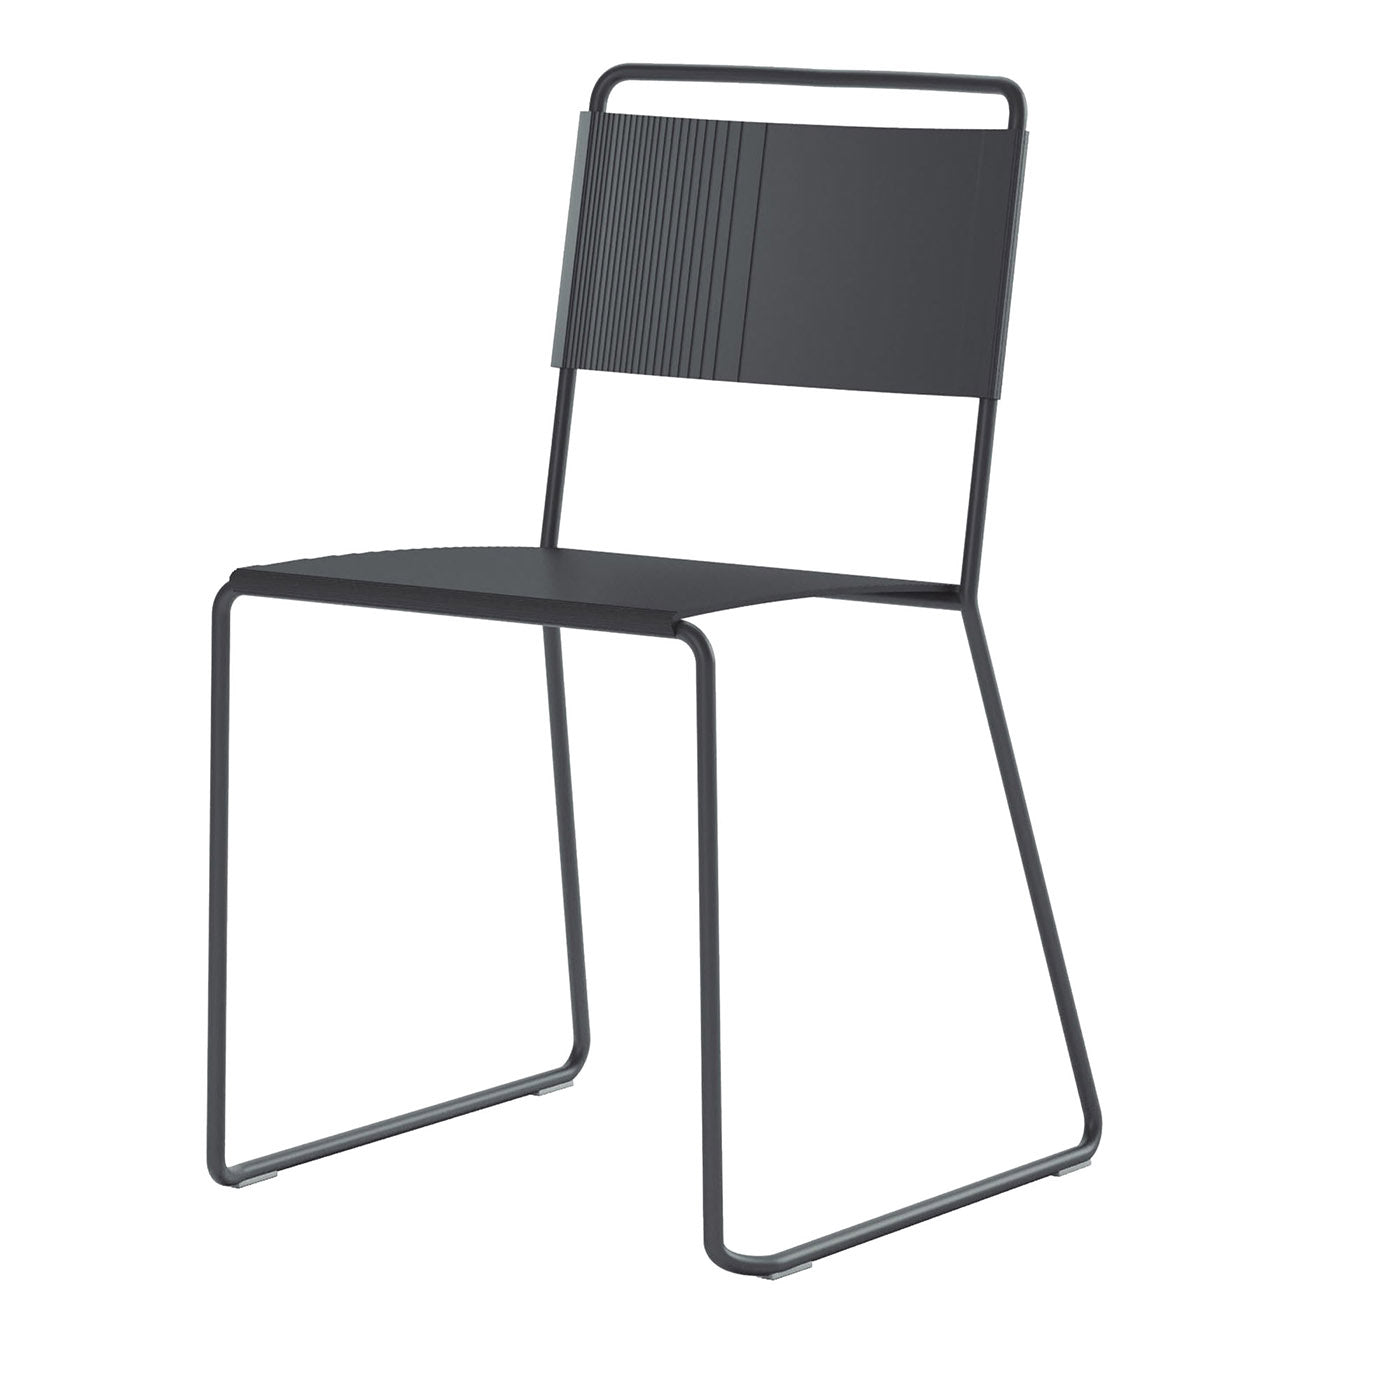 4er-Set Estrosa Aluminium lackierte Stühle - Hauptansicht